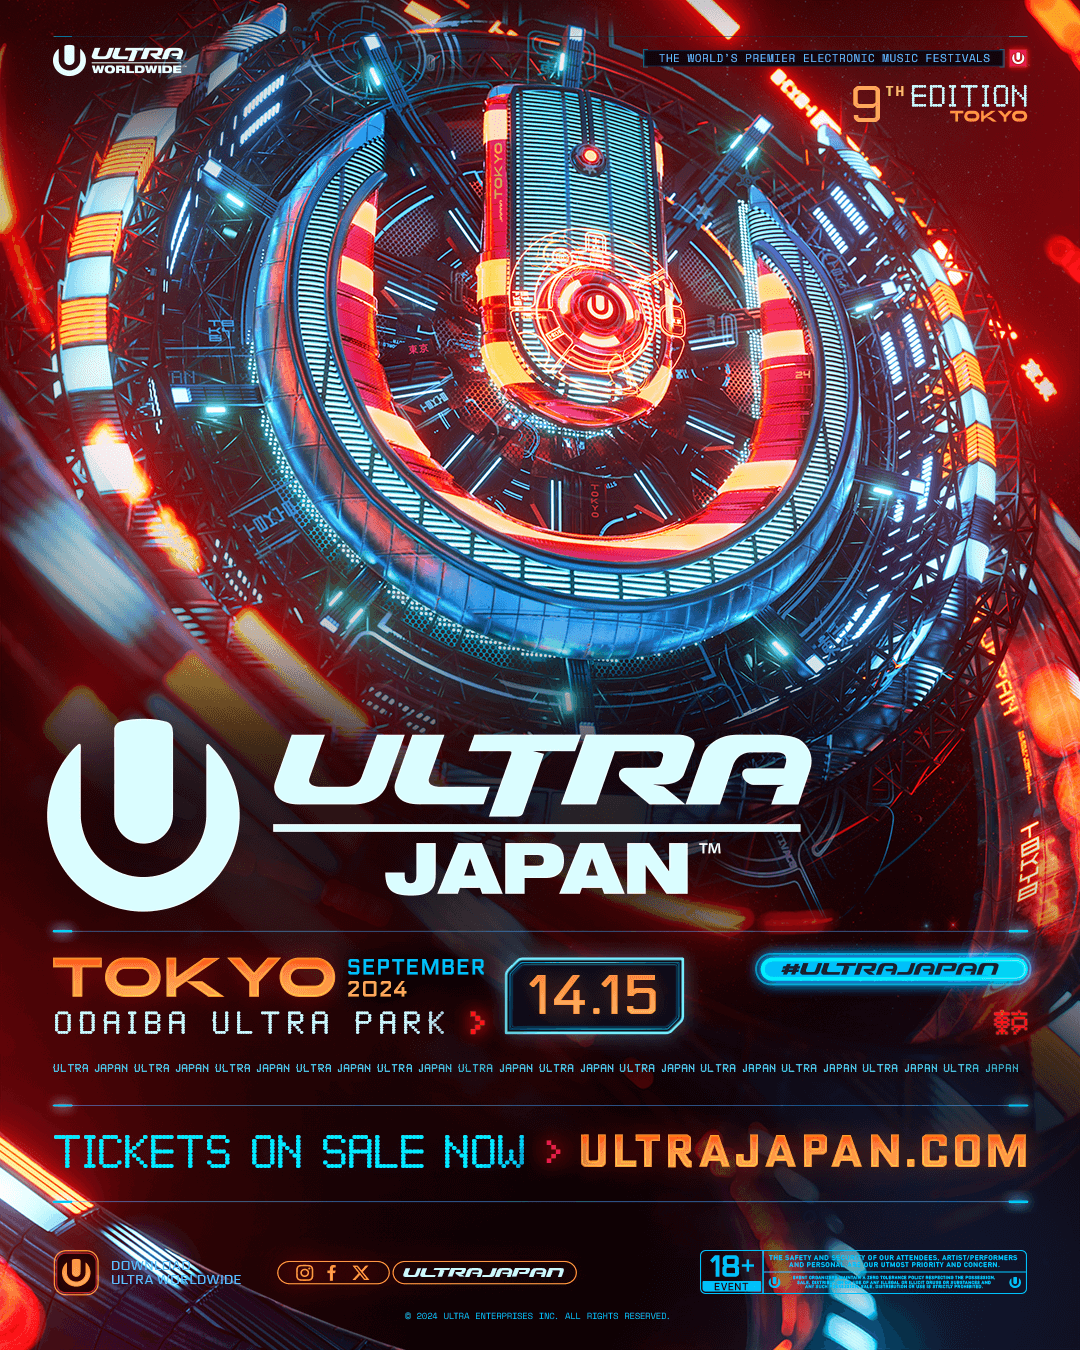 ULTRA JAPAN TOKYO SEPTEMBER 2024